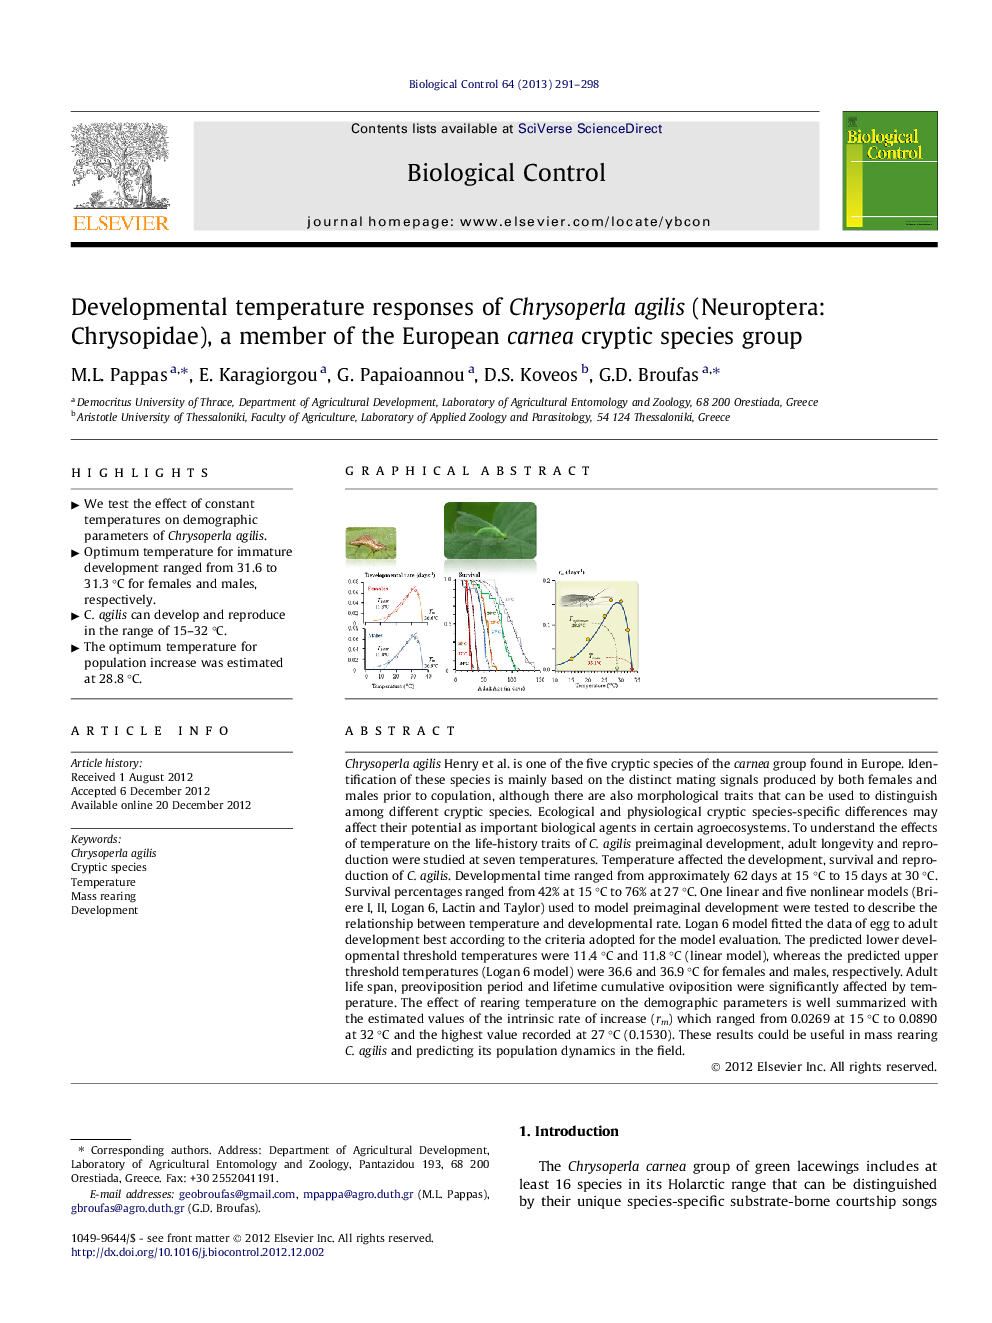 Developmental temperature responses of Chrysoperla agilis (Neuroptera: Chrysopidae), a member of the European carnea cryptic species group